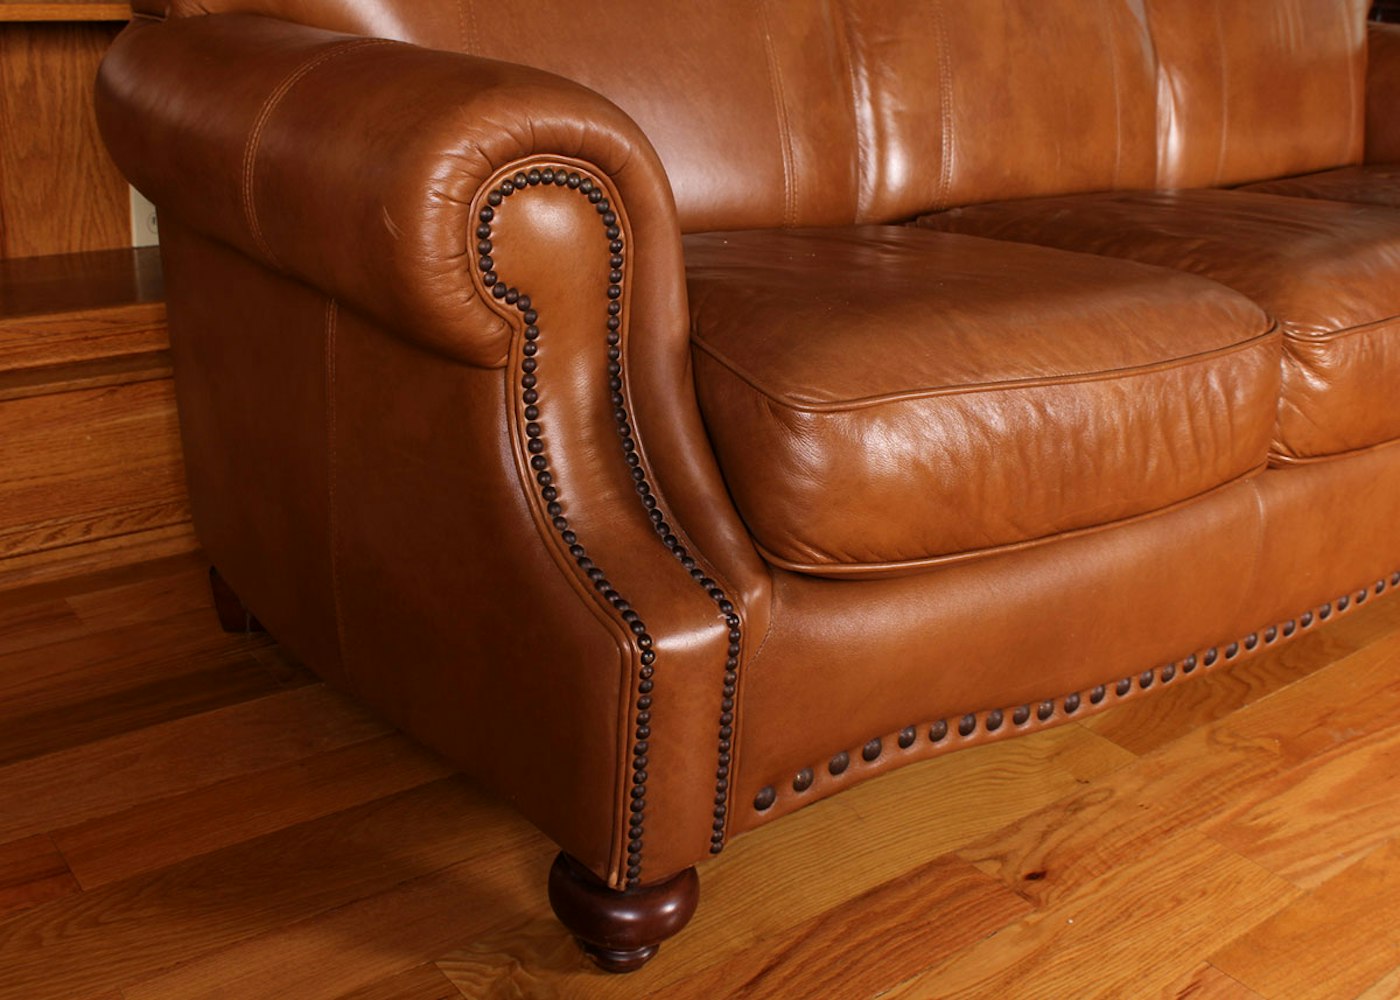 plush leather sleeper sofa